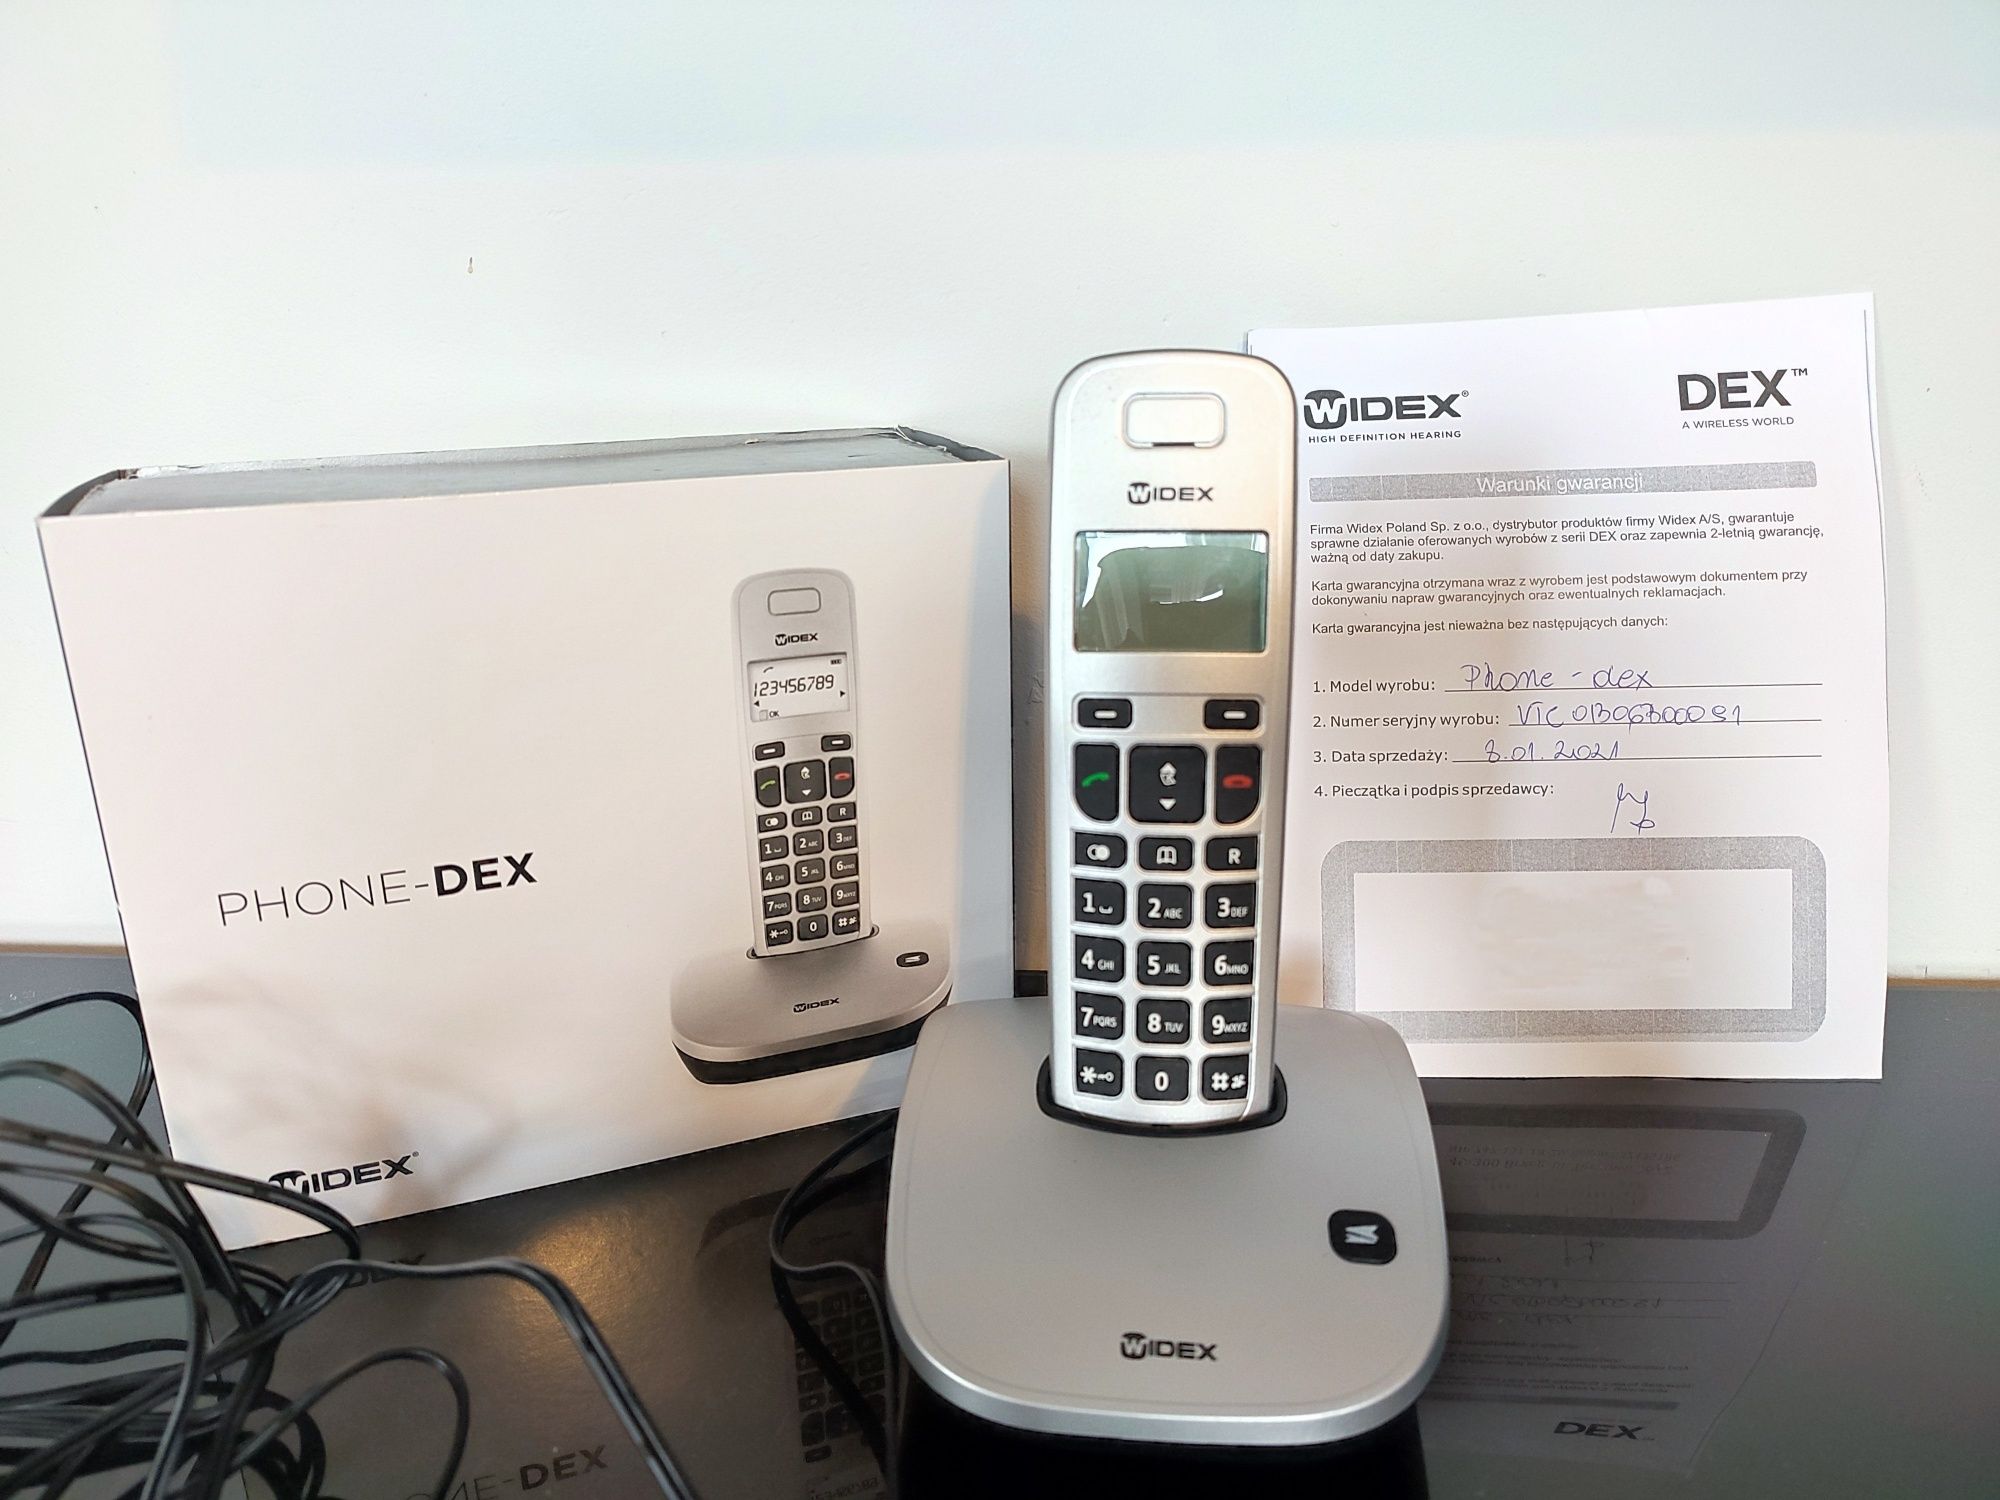 Phone-dex widex telefon